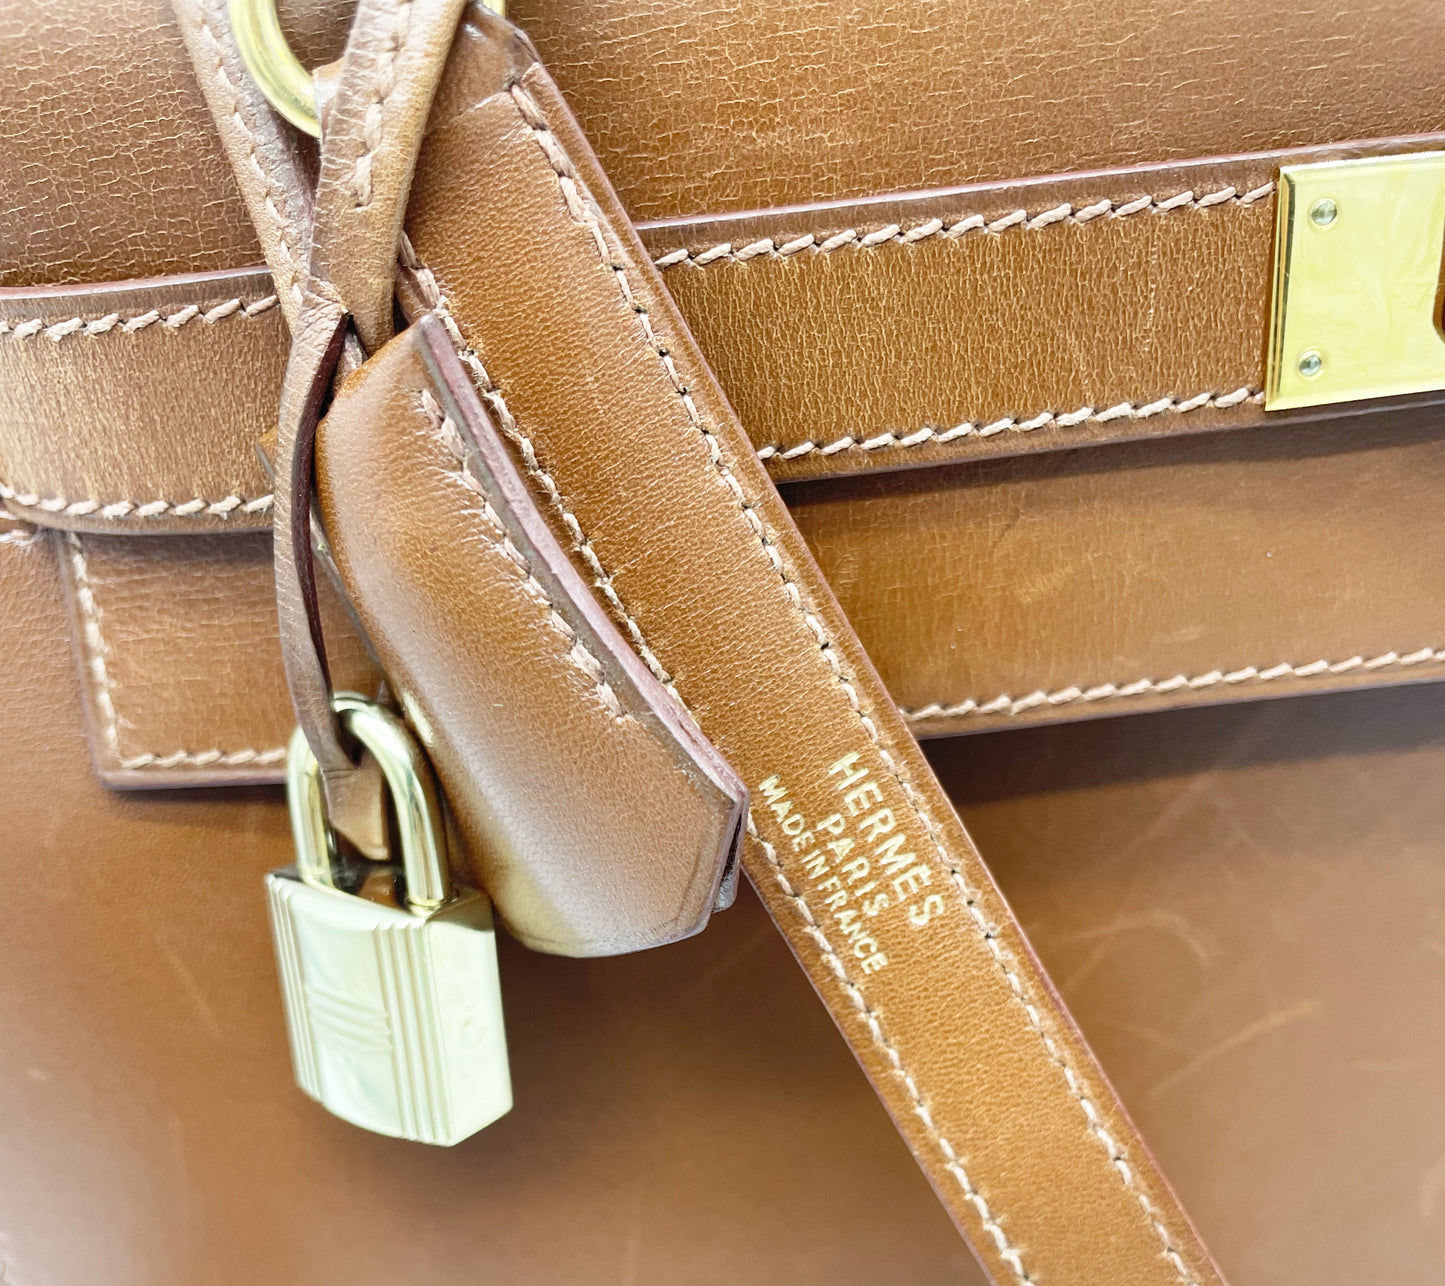 Hermes Kelly bag in hazelnut box leather 32cm